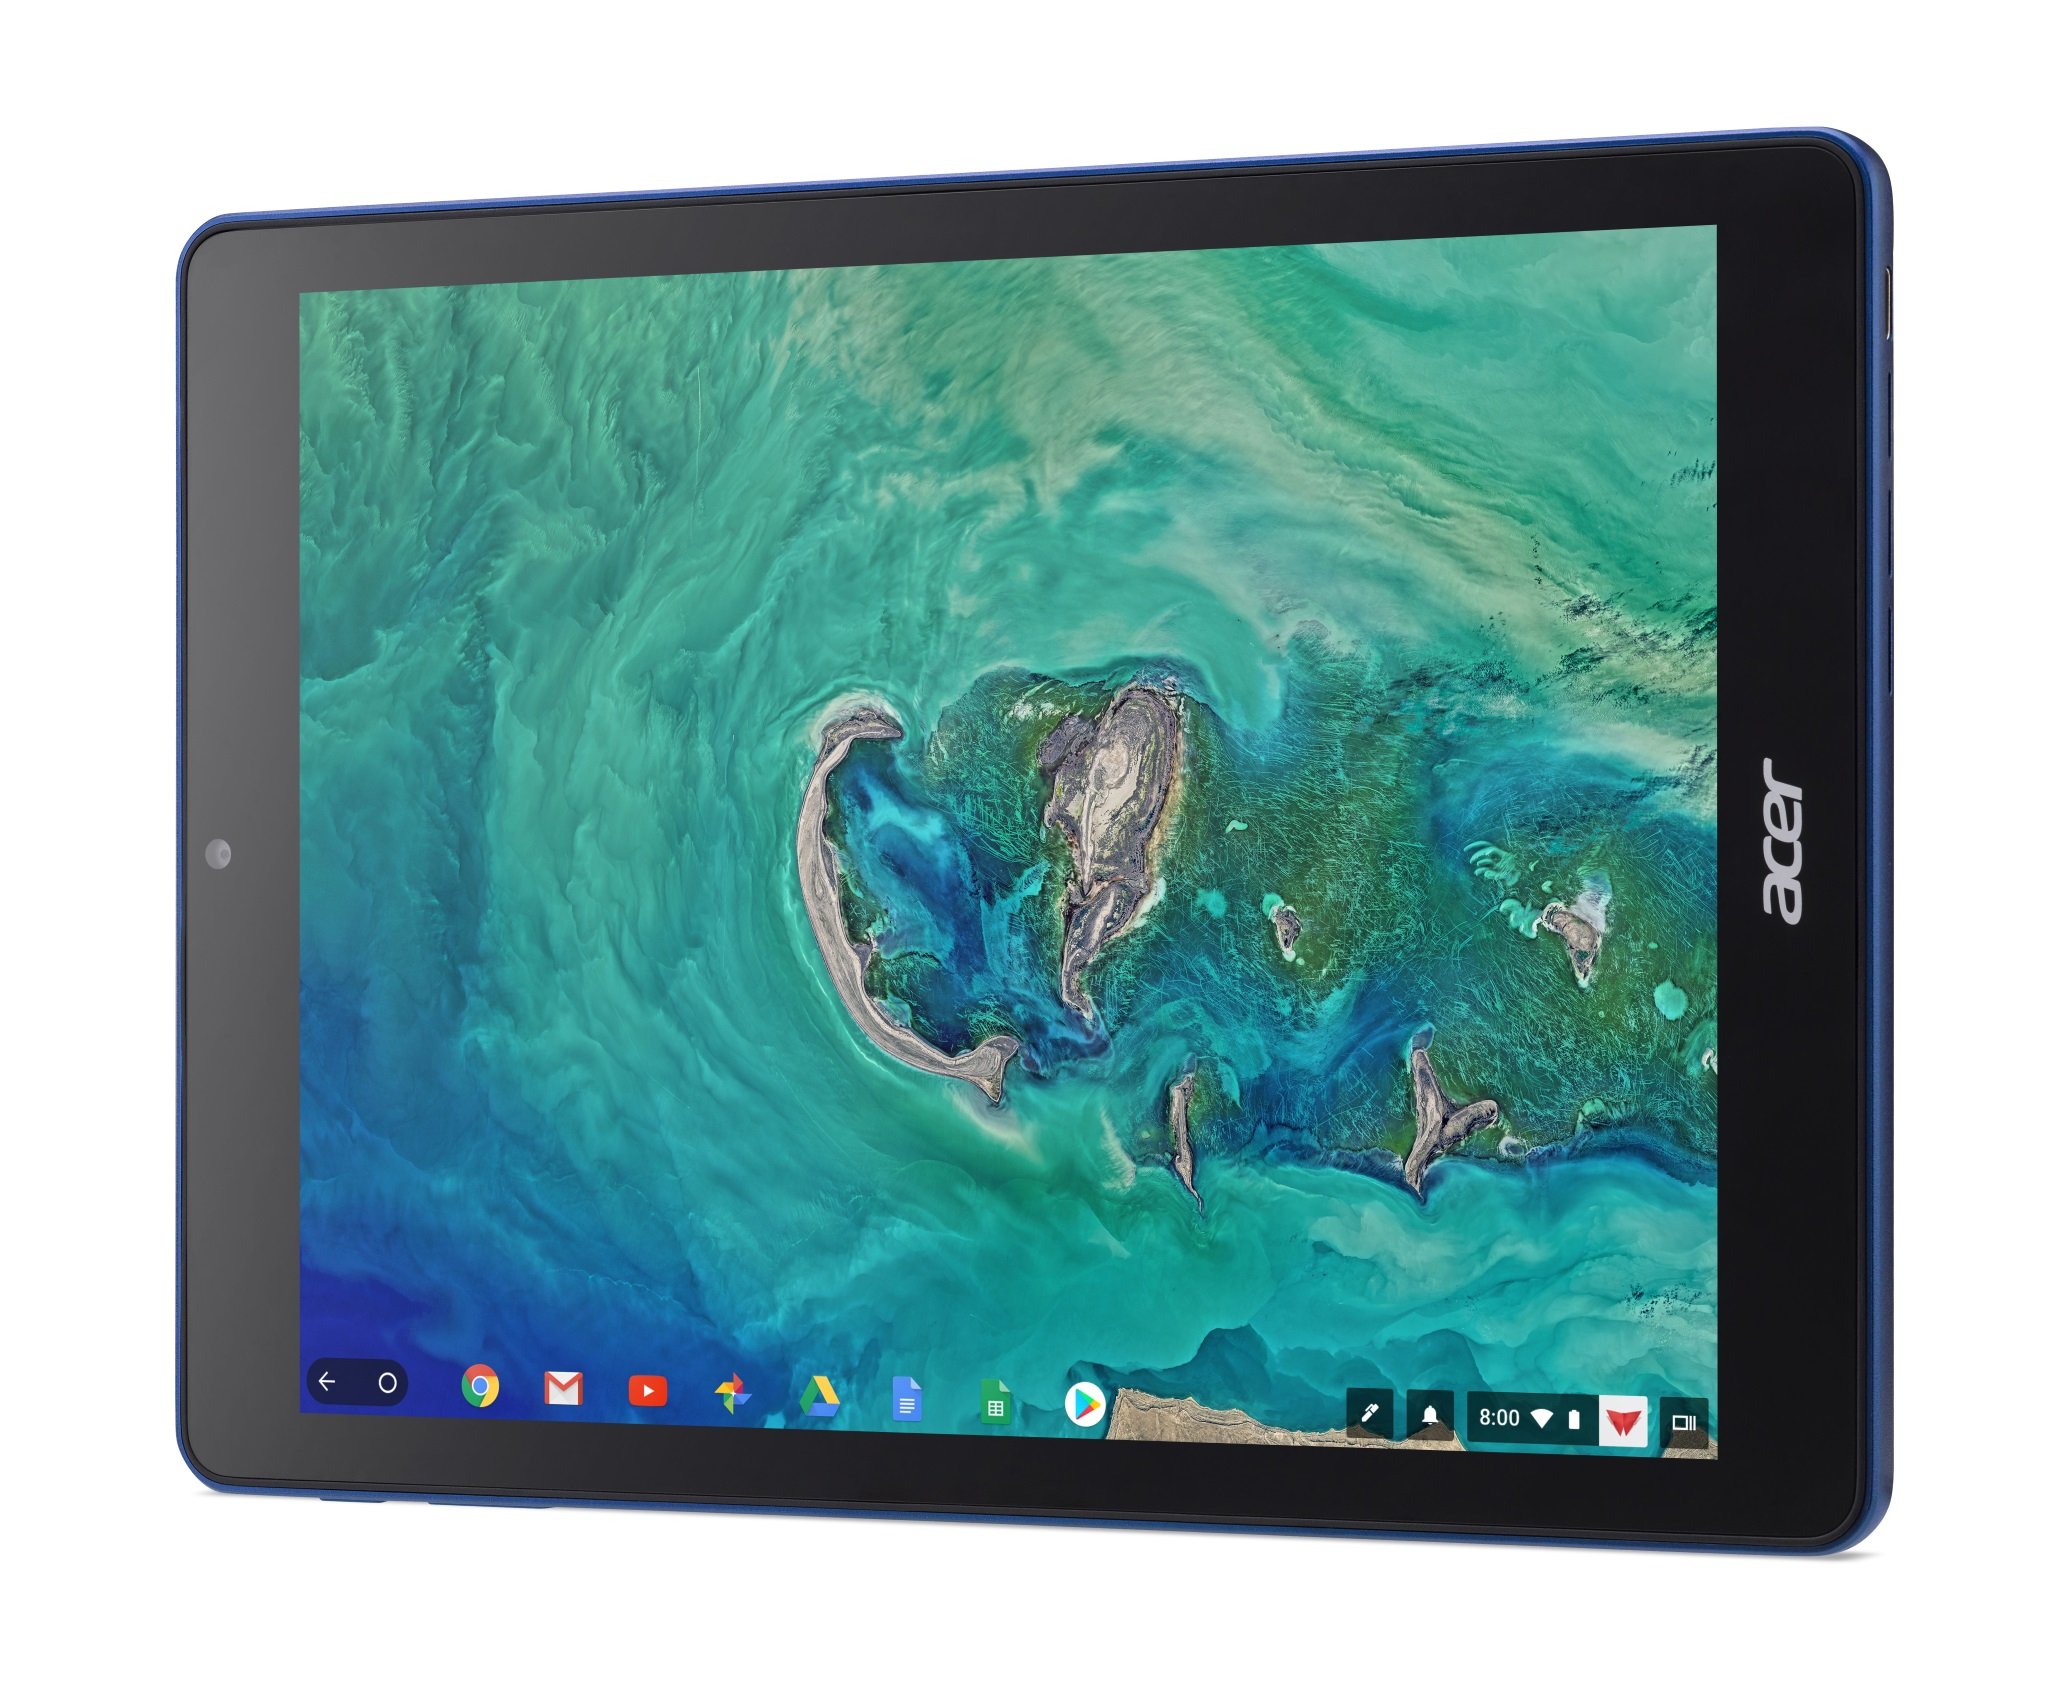 Google announces the first Chrome OS tablet: The Acer Chromebook Tab 10